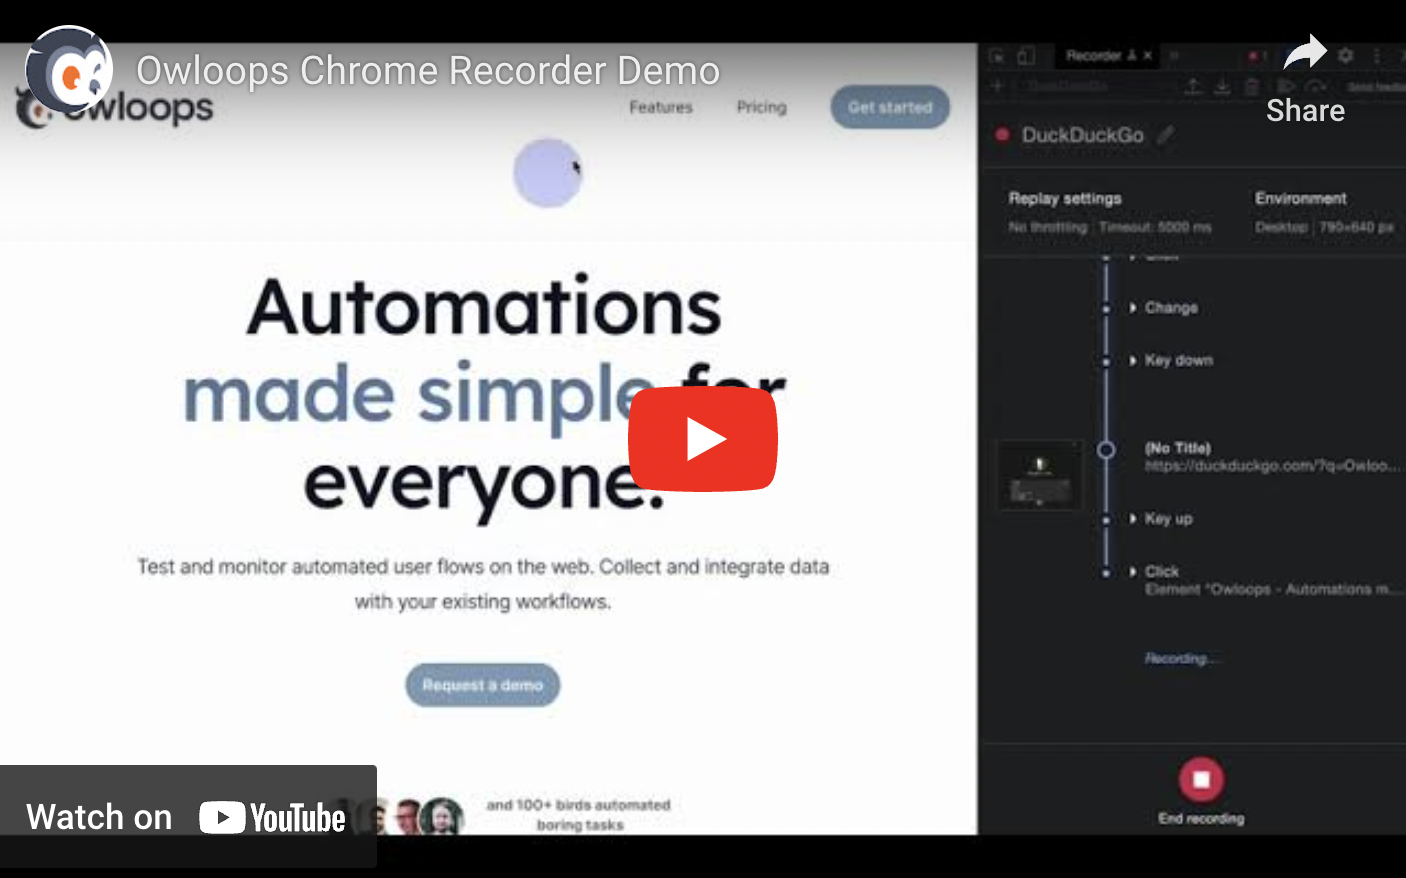 Owloops Chrome Recorder Demo